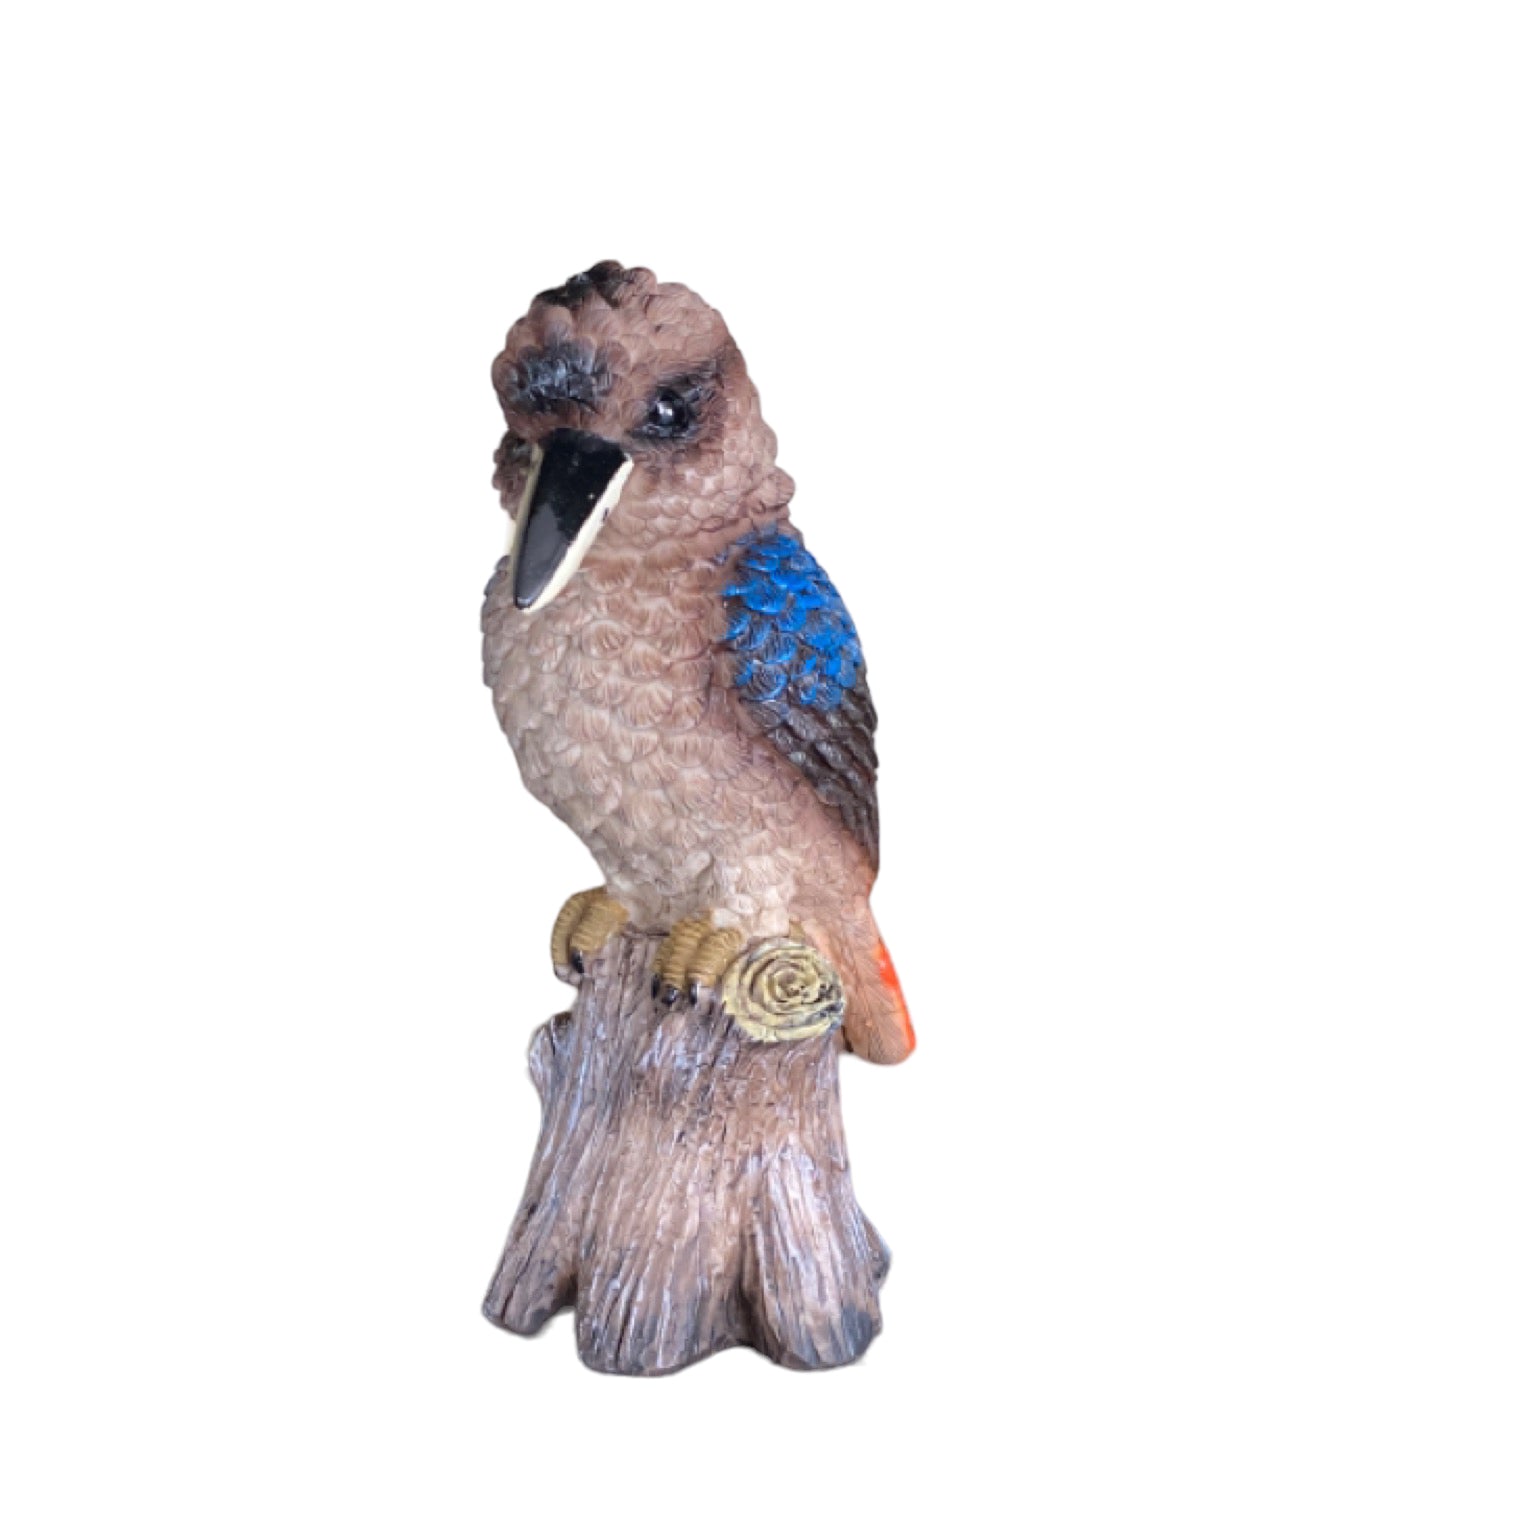 Kookaburra 18cm Ornament - The Renmy Store Homewares & Gifts 